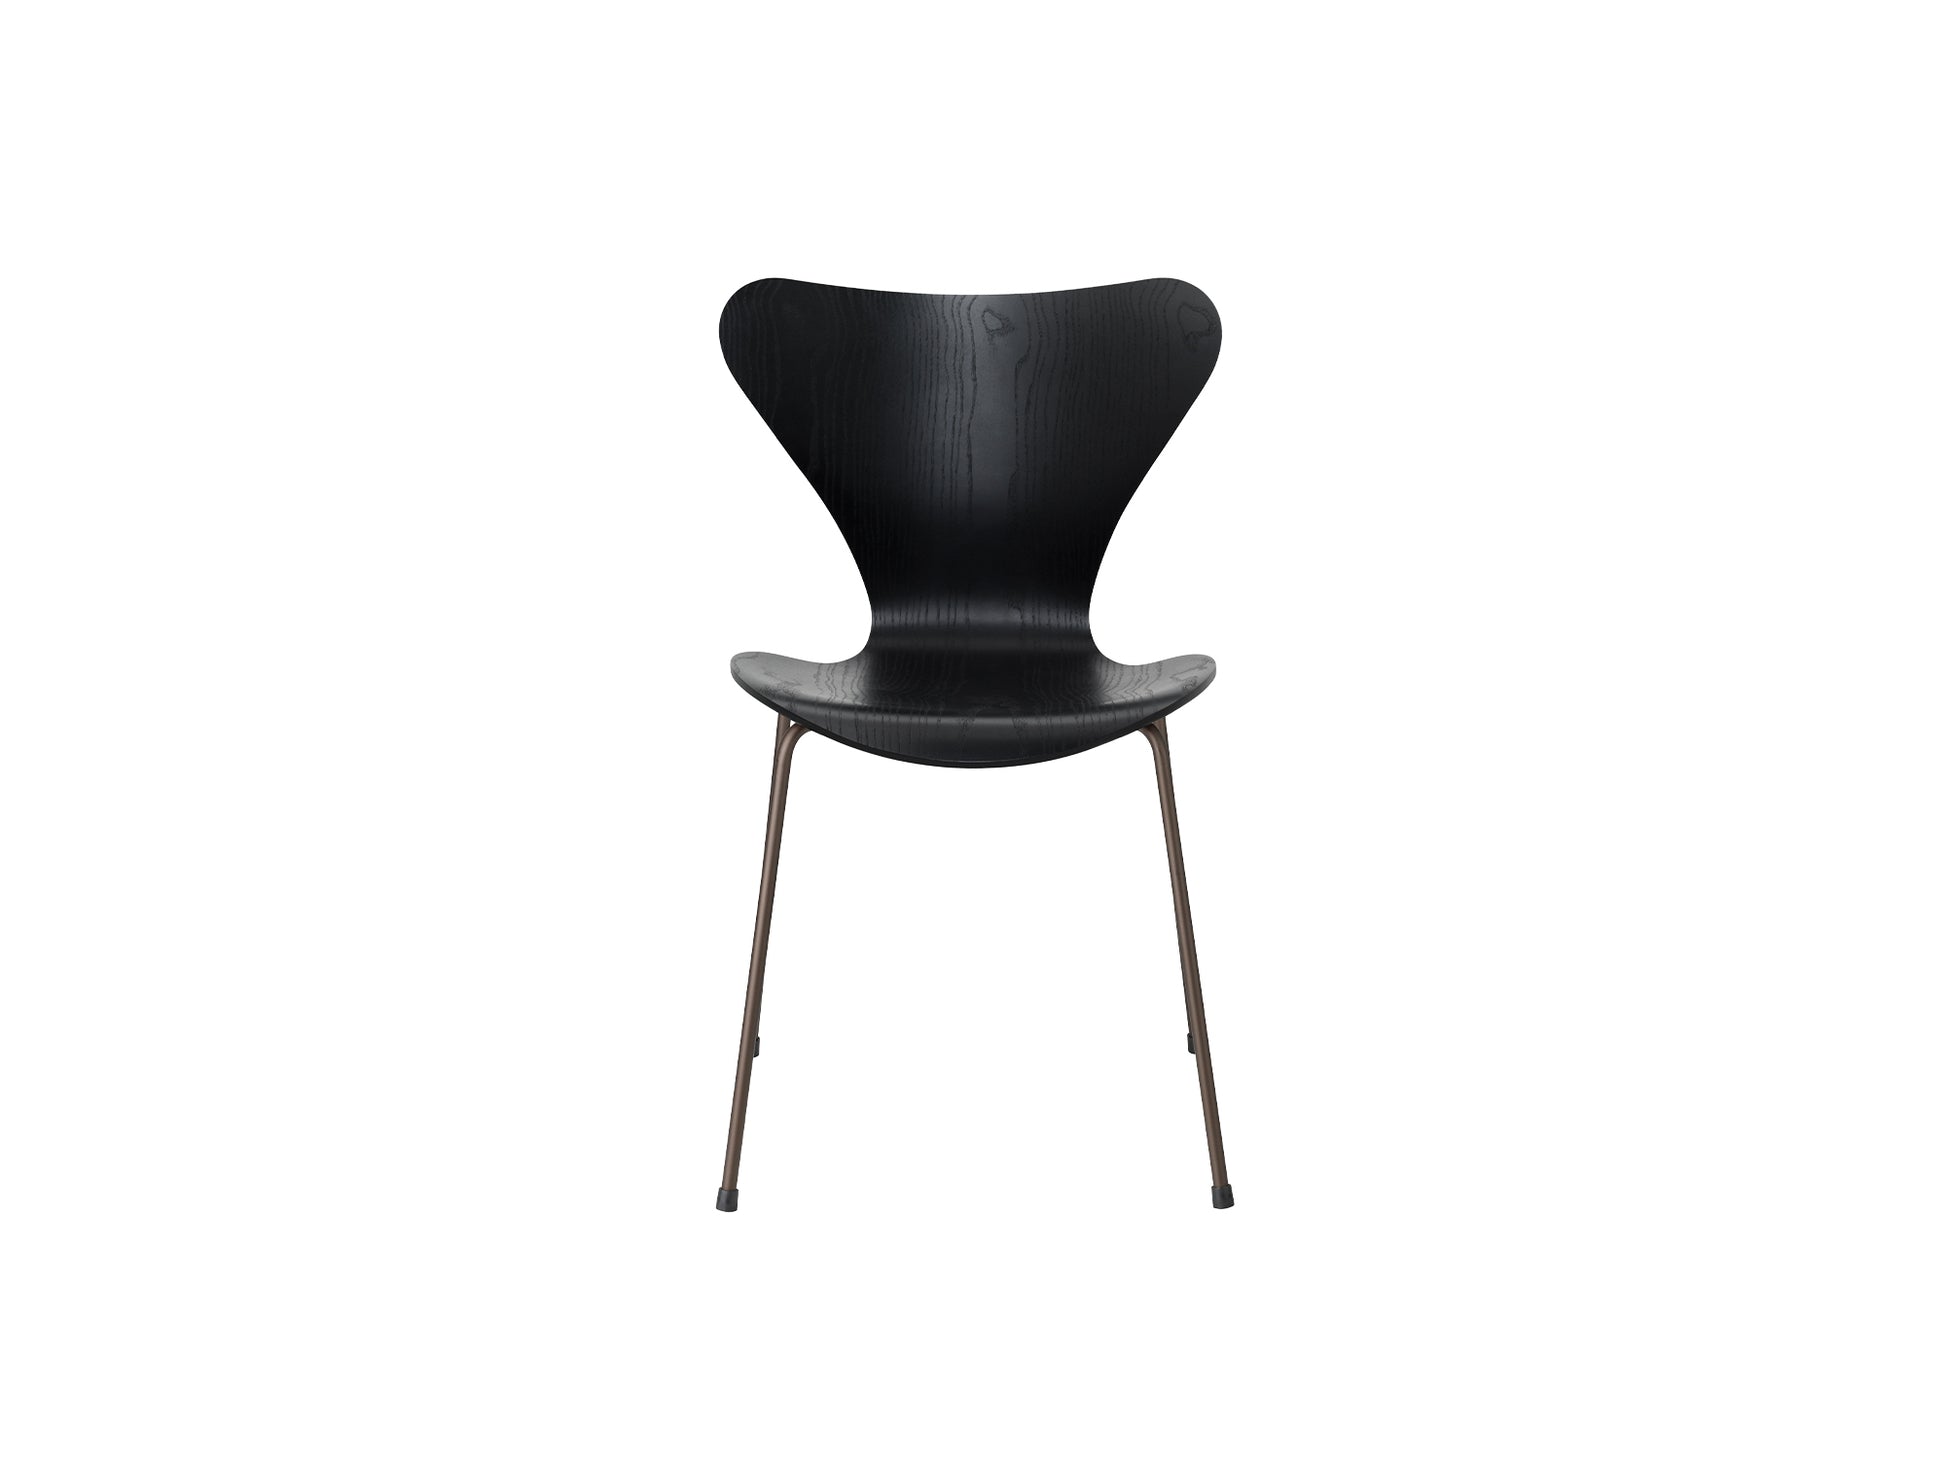 Series 7™ 3107 Dining Chair by Fritz Hansen - Black Coloured Ash Veneer Shell / Brown Bronze Steel